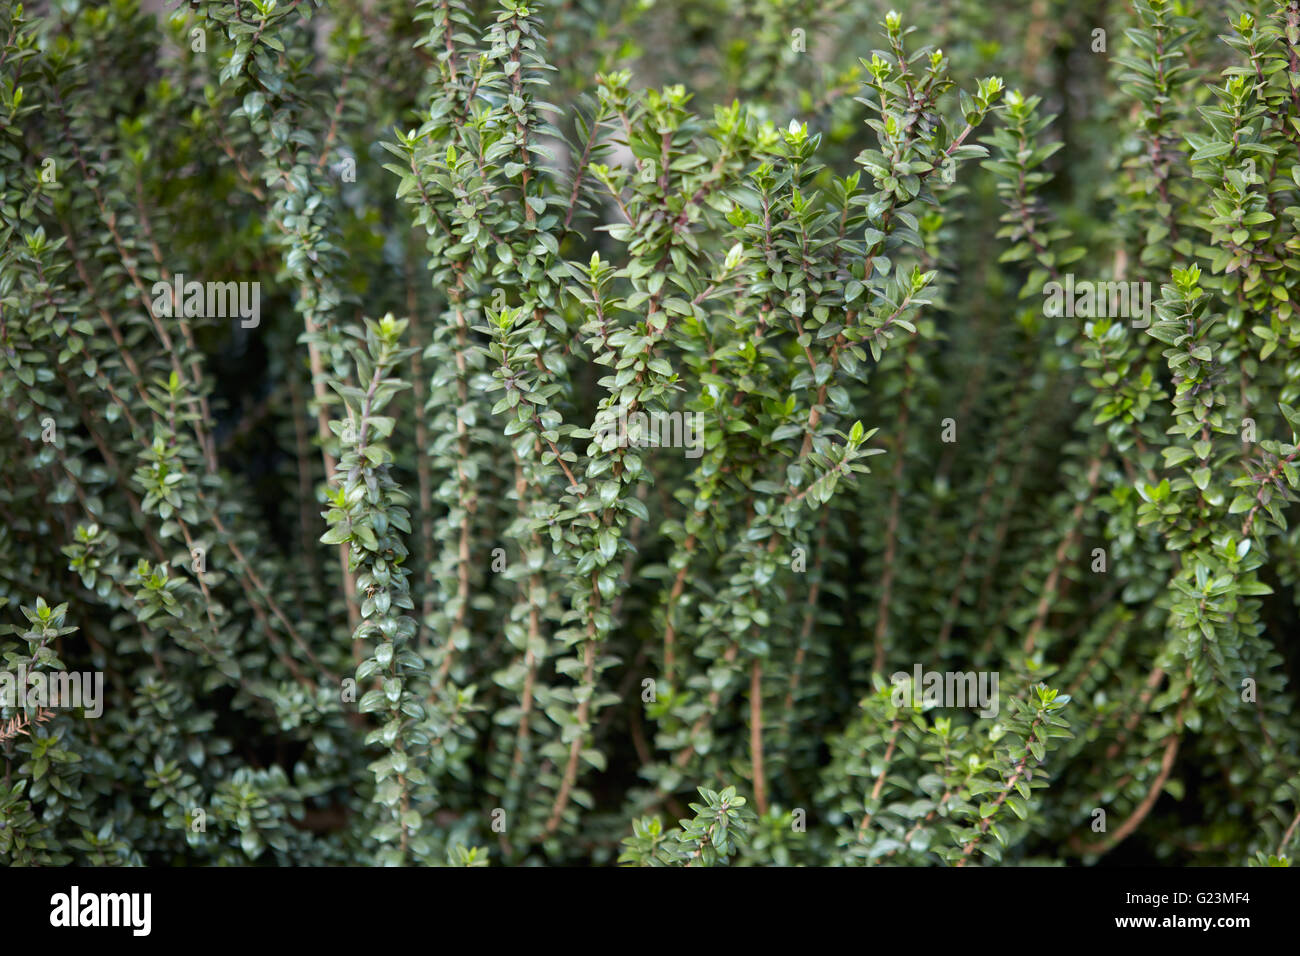 Myrtle plant, Myrtus communis background Stock Photo